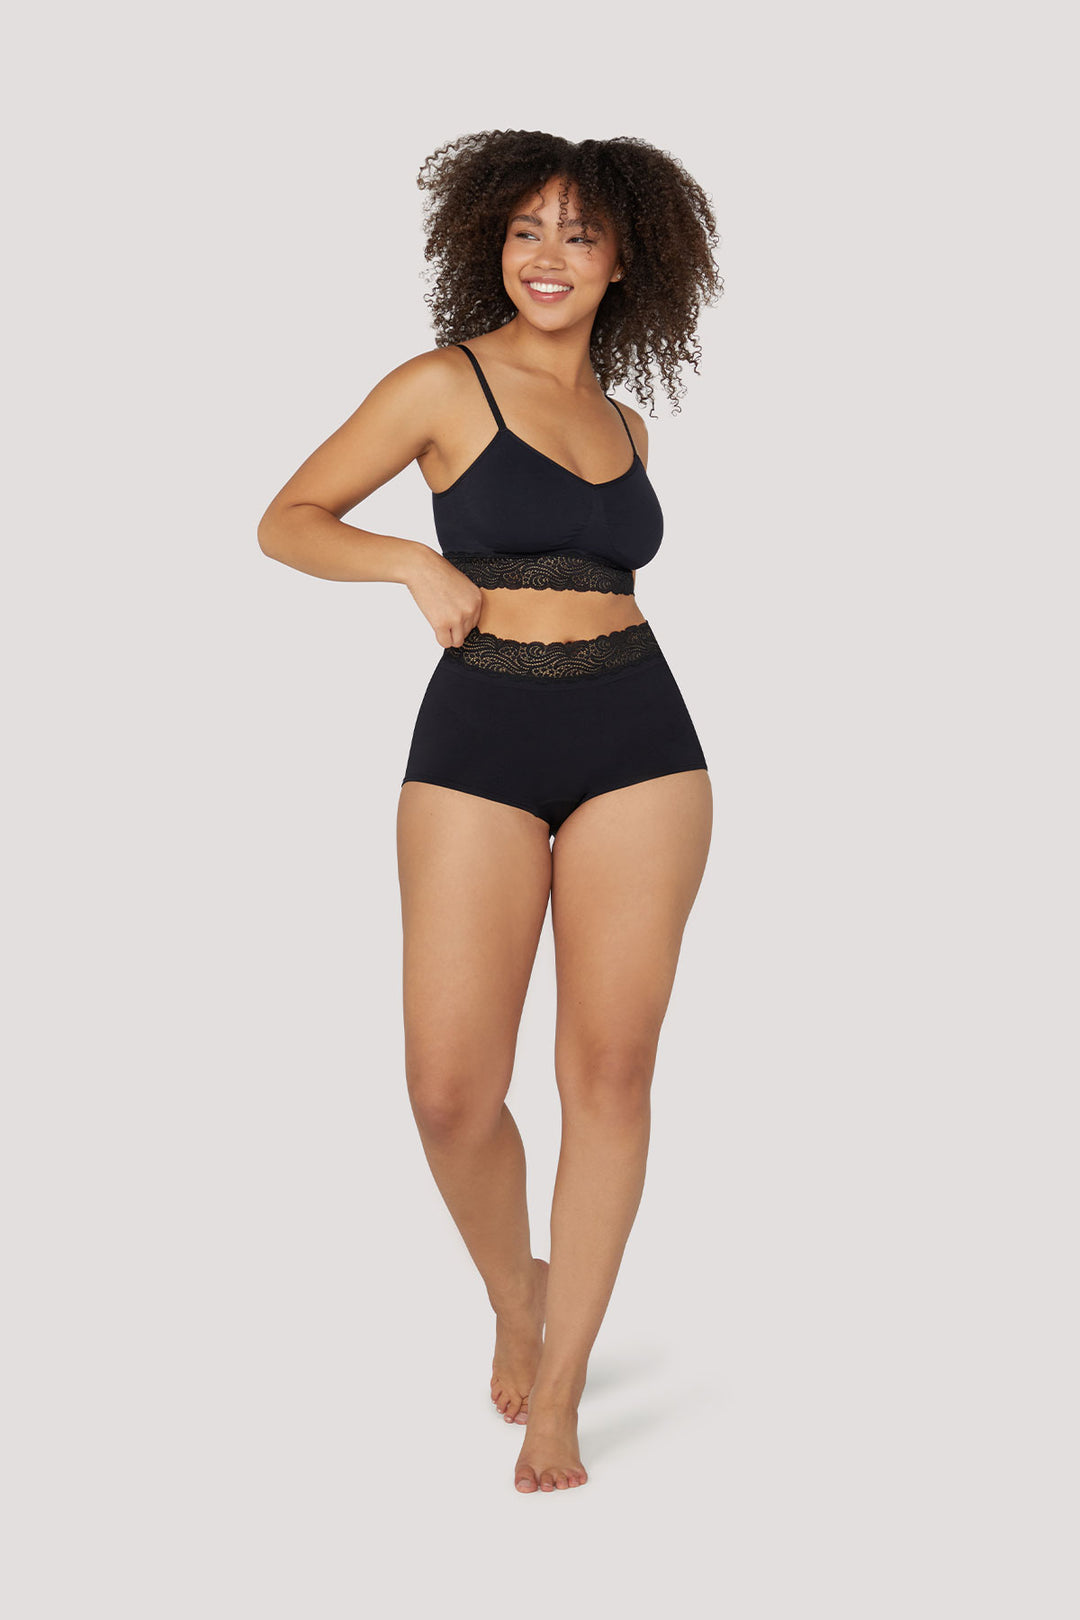 Lace Wireless Bra and Lace Boy Leg Underwear Set | Bella Bodies Australia | Black